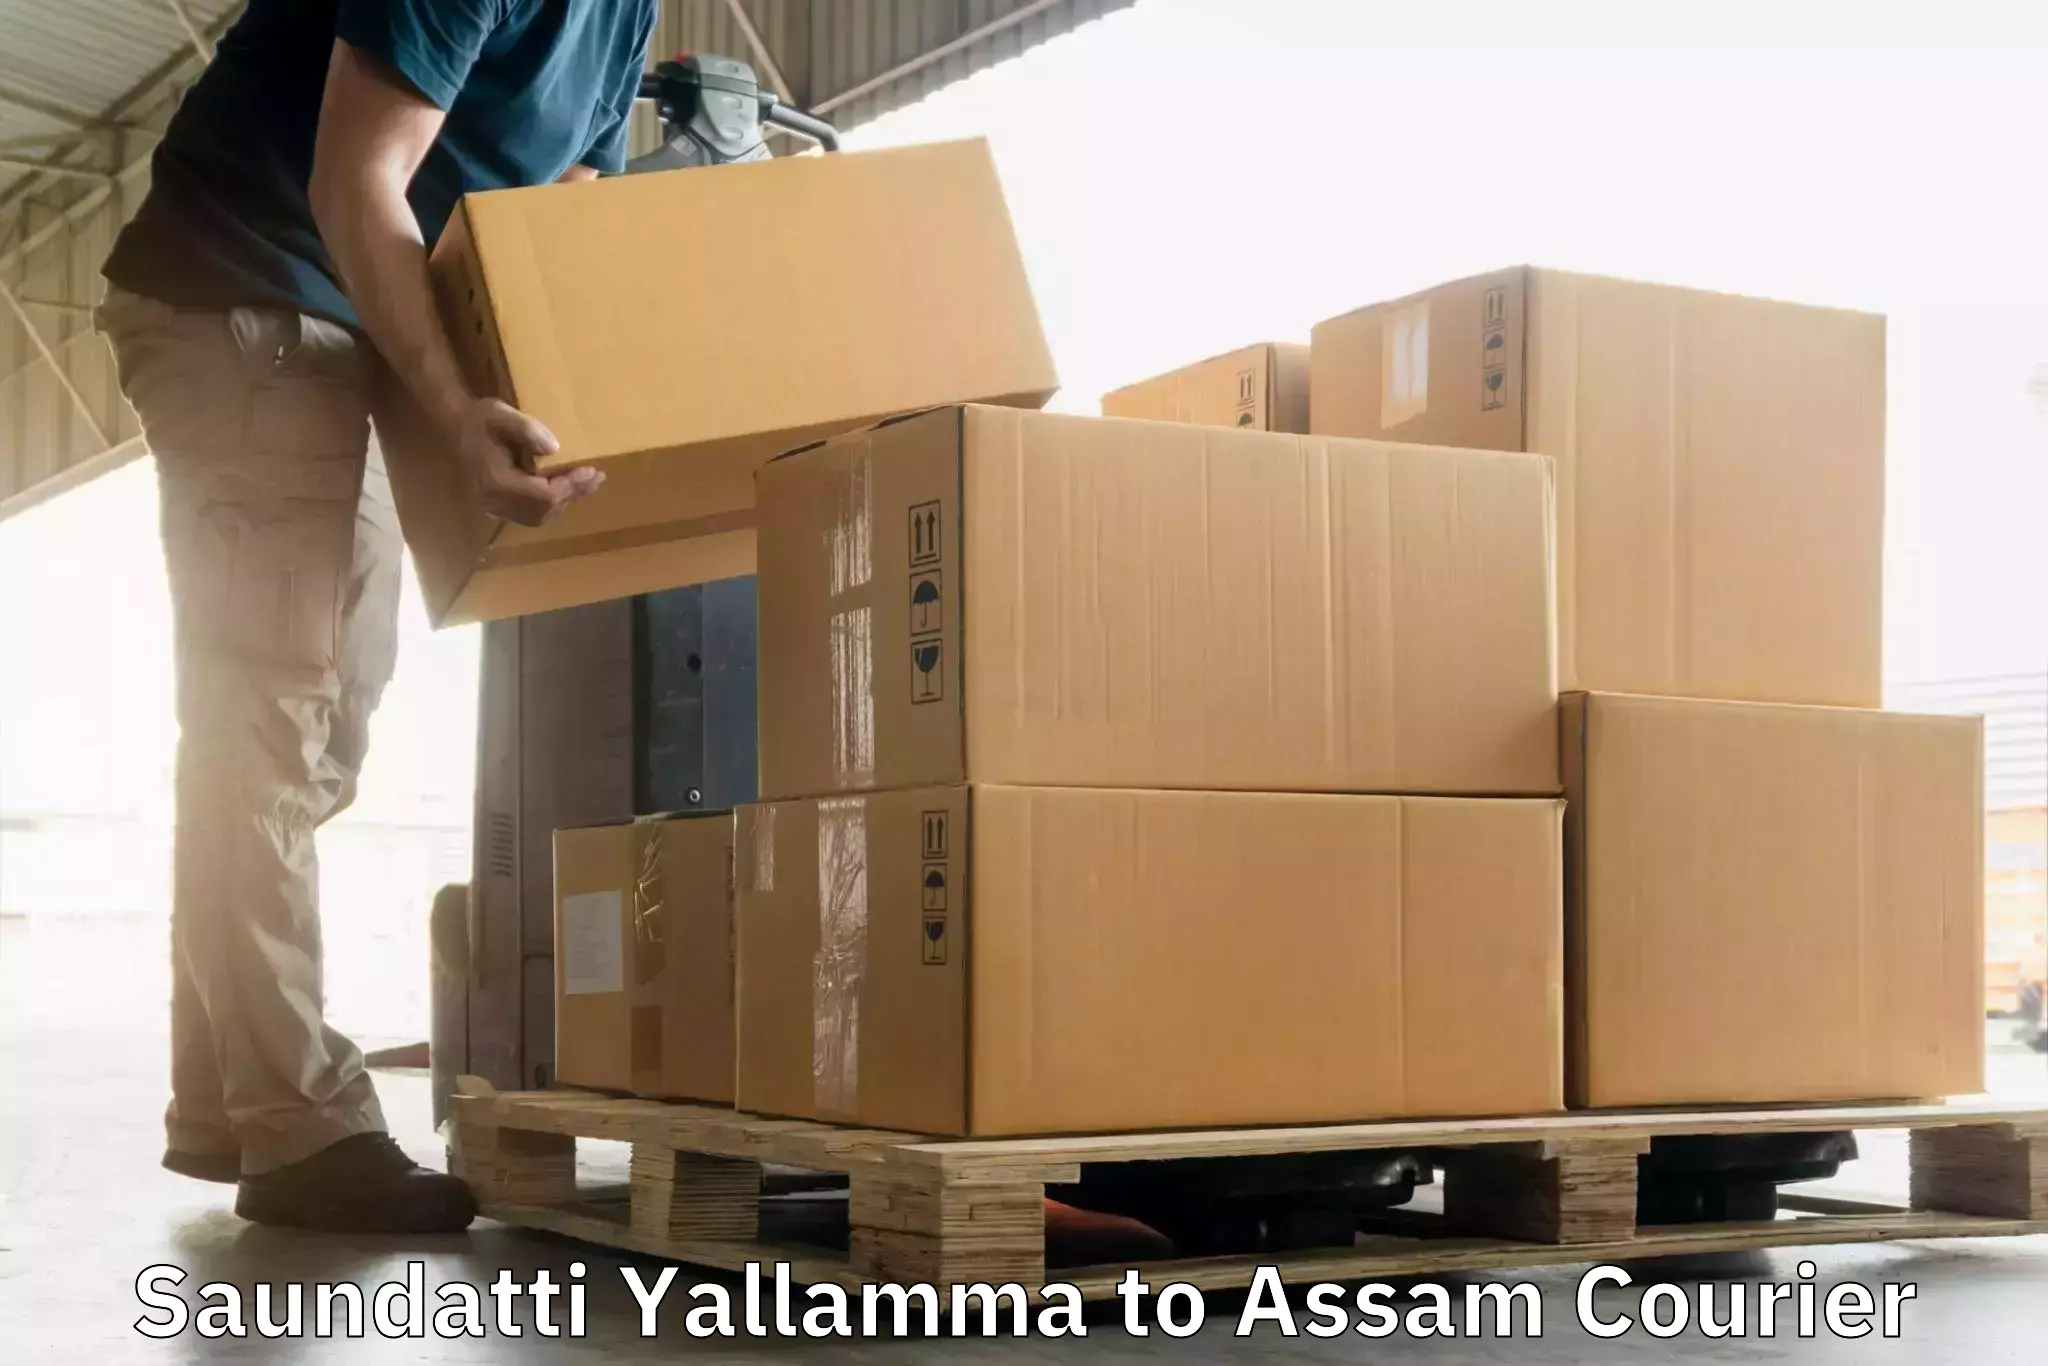 Courier service partnerships Saundatti Yallamma to Rupai Siding